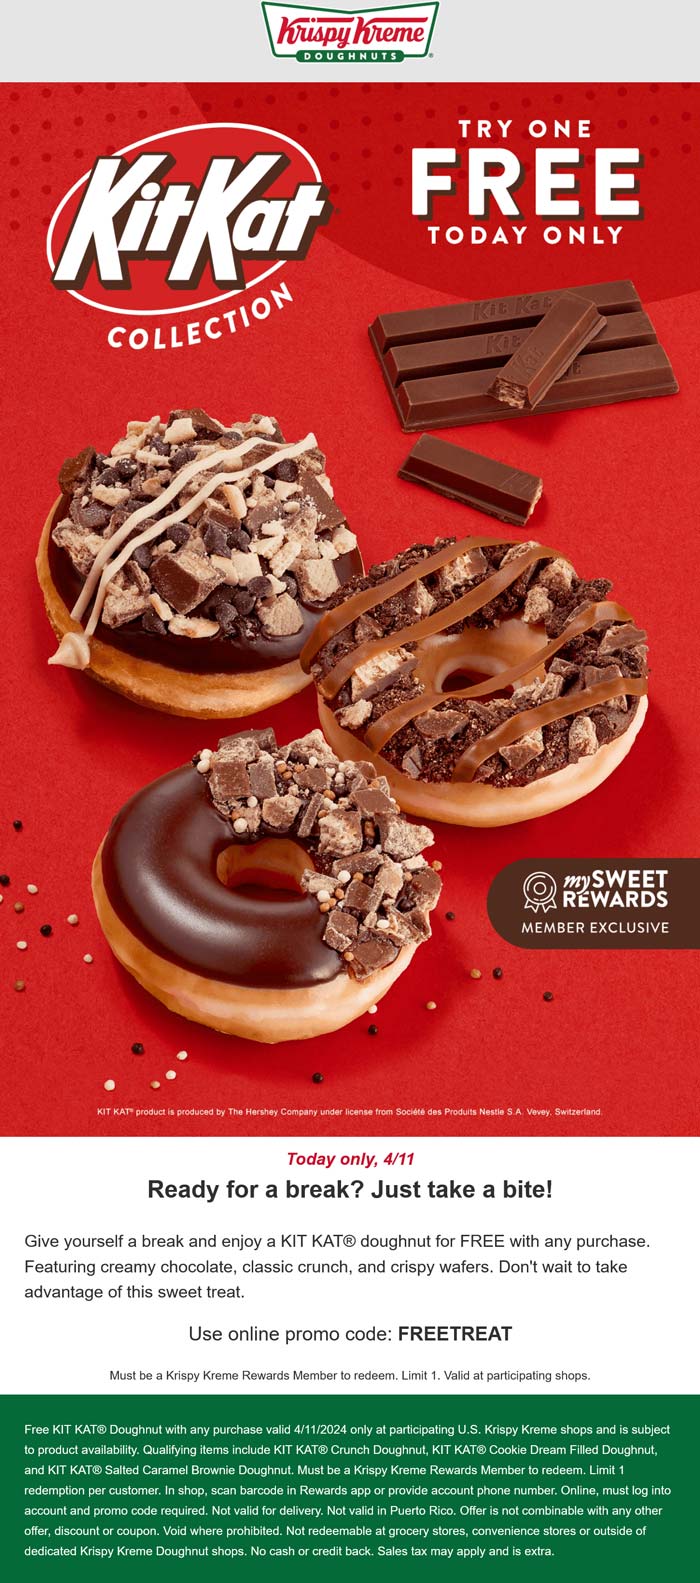 Krispy Kreme restaurants Coupon  Free kit kat doughnut today at Krispy Kreme via promo code FREETREAT #krispykreme 